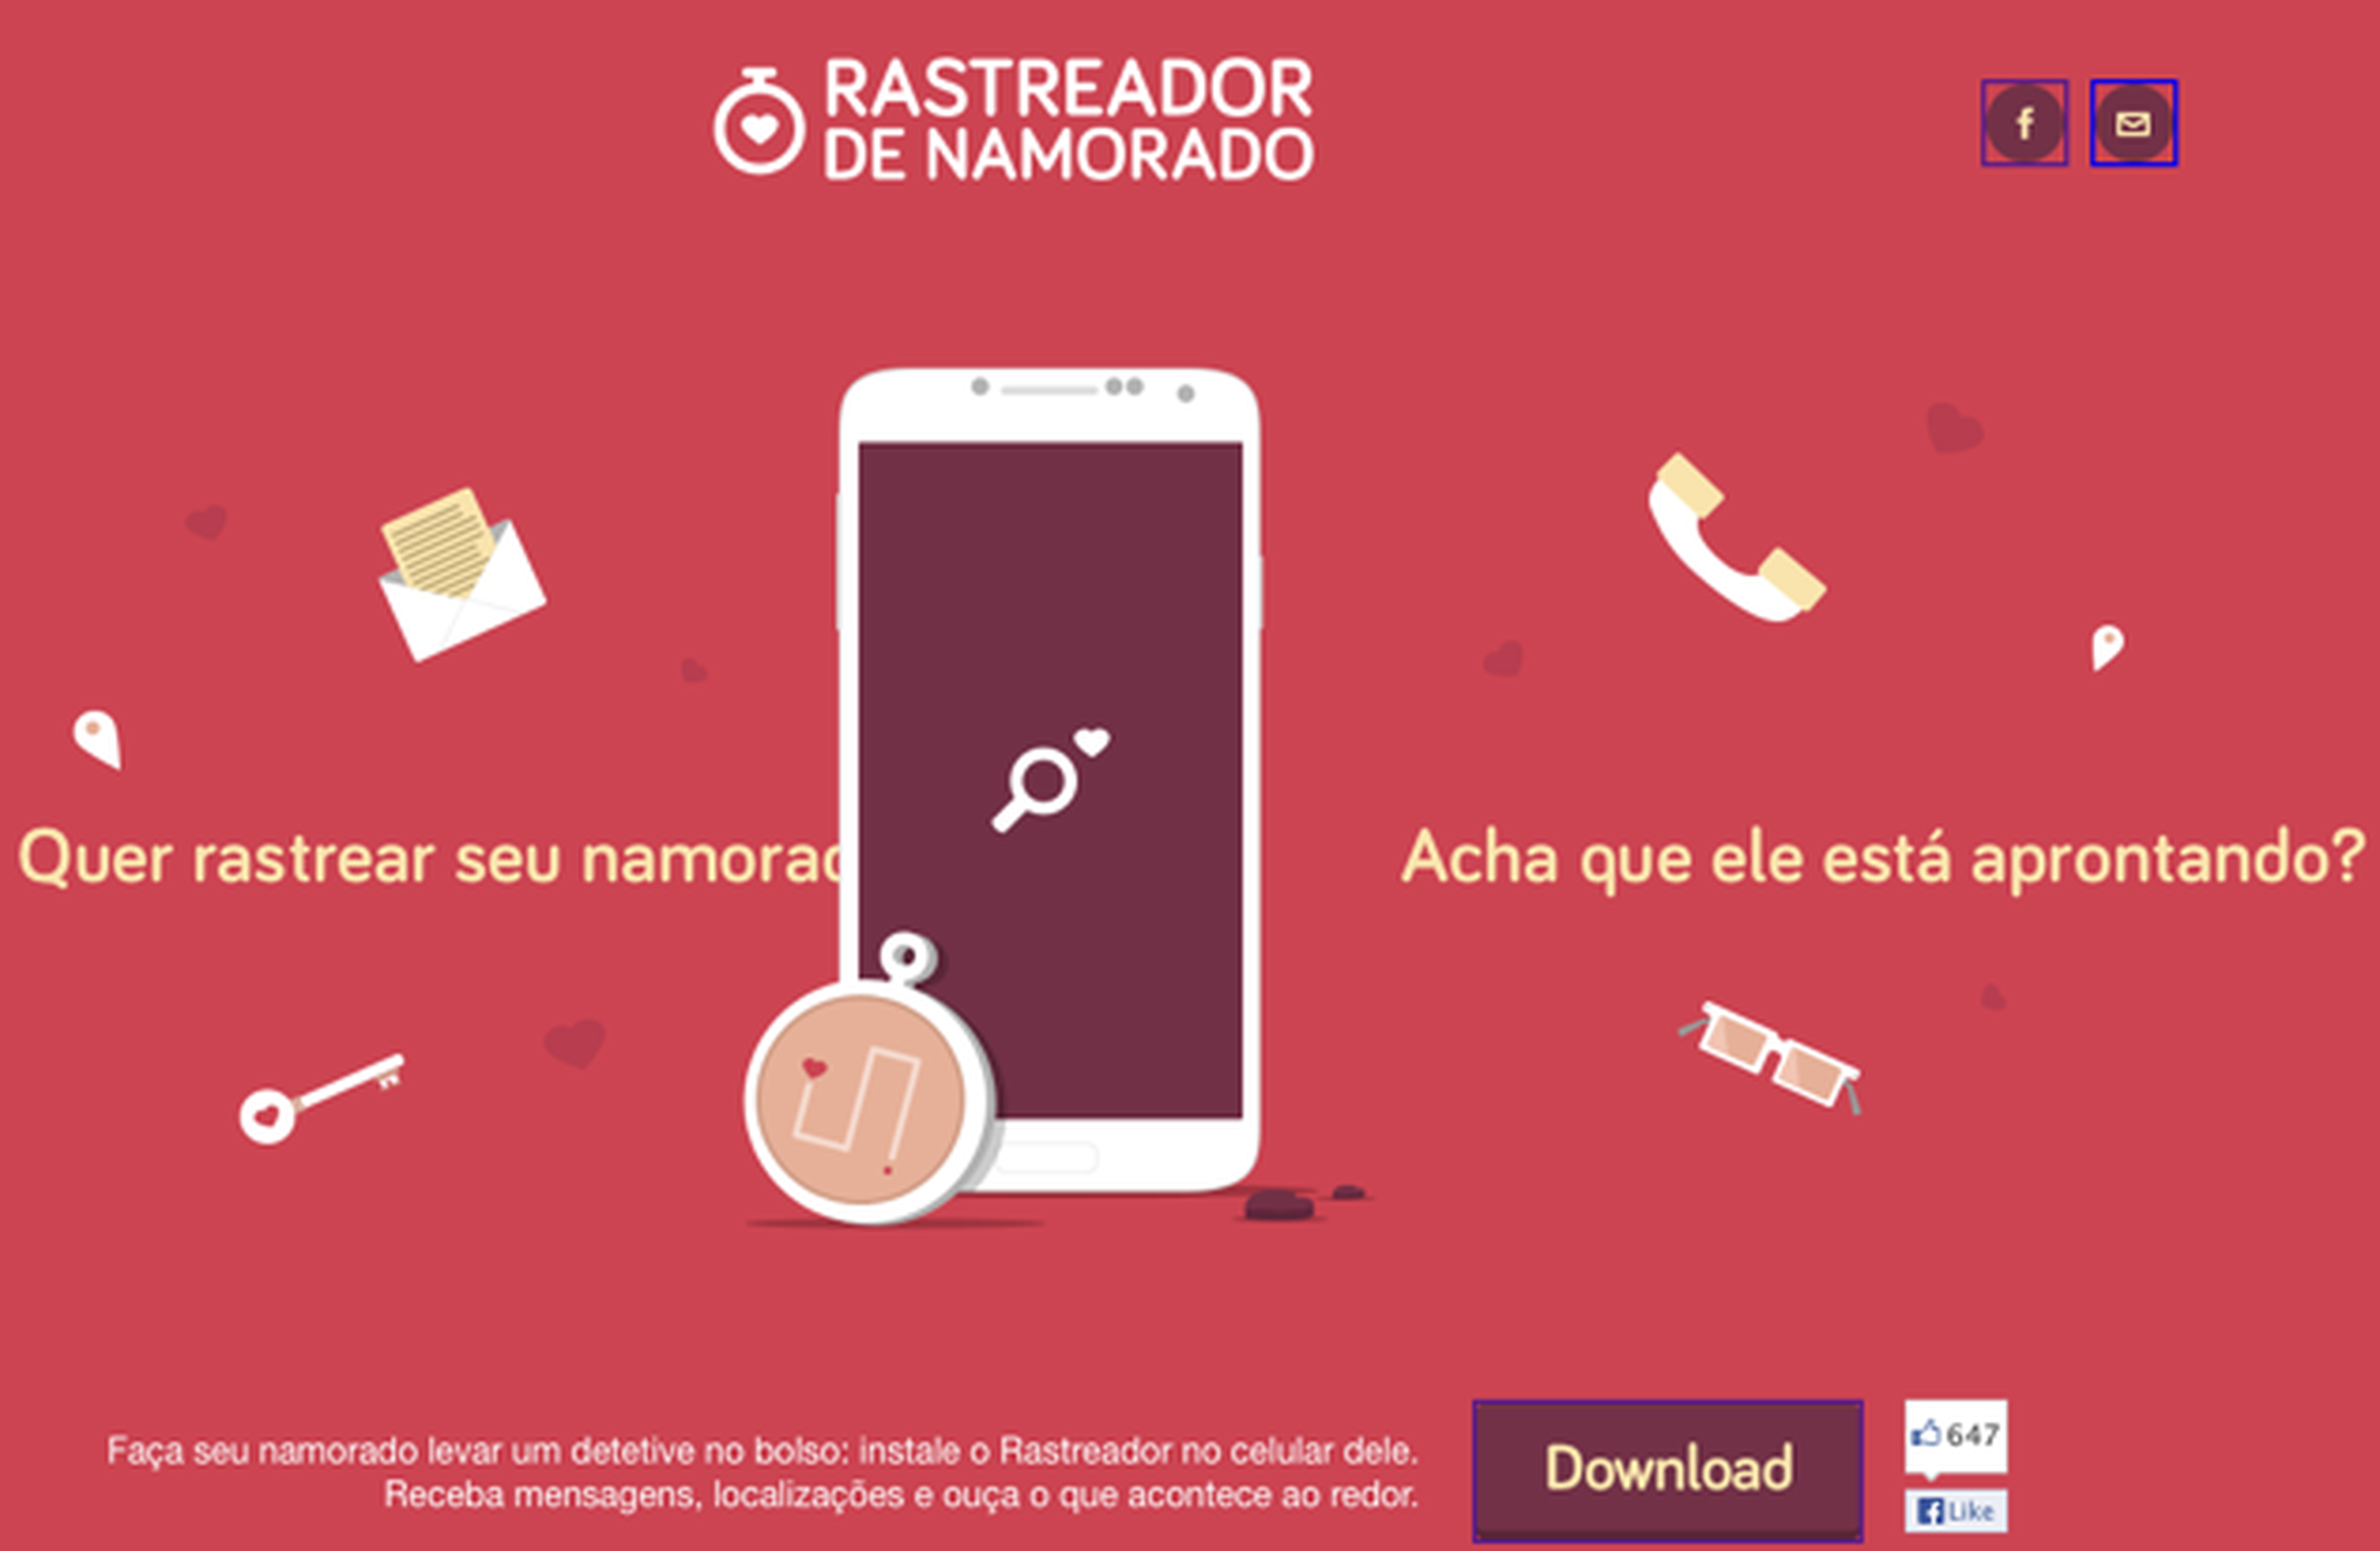 Rastreador de Namorado, una app para espiar a tu pareja